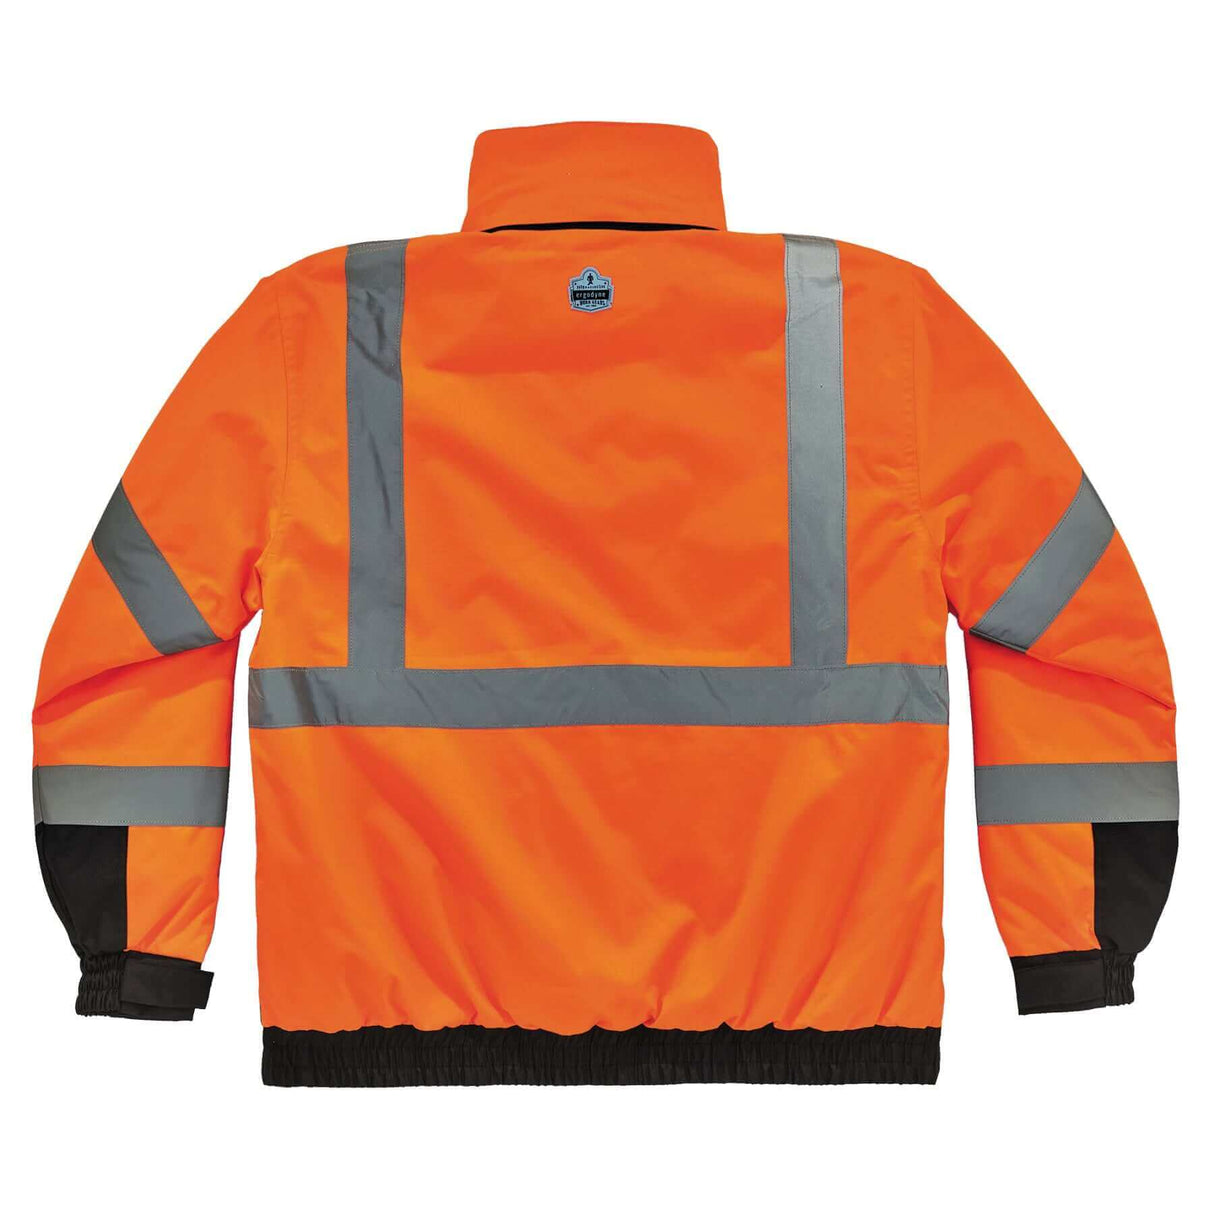 Ergodyne GloWear 8381 Thermal 4-1 Hi-Vis Jacket